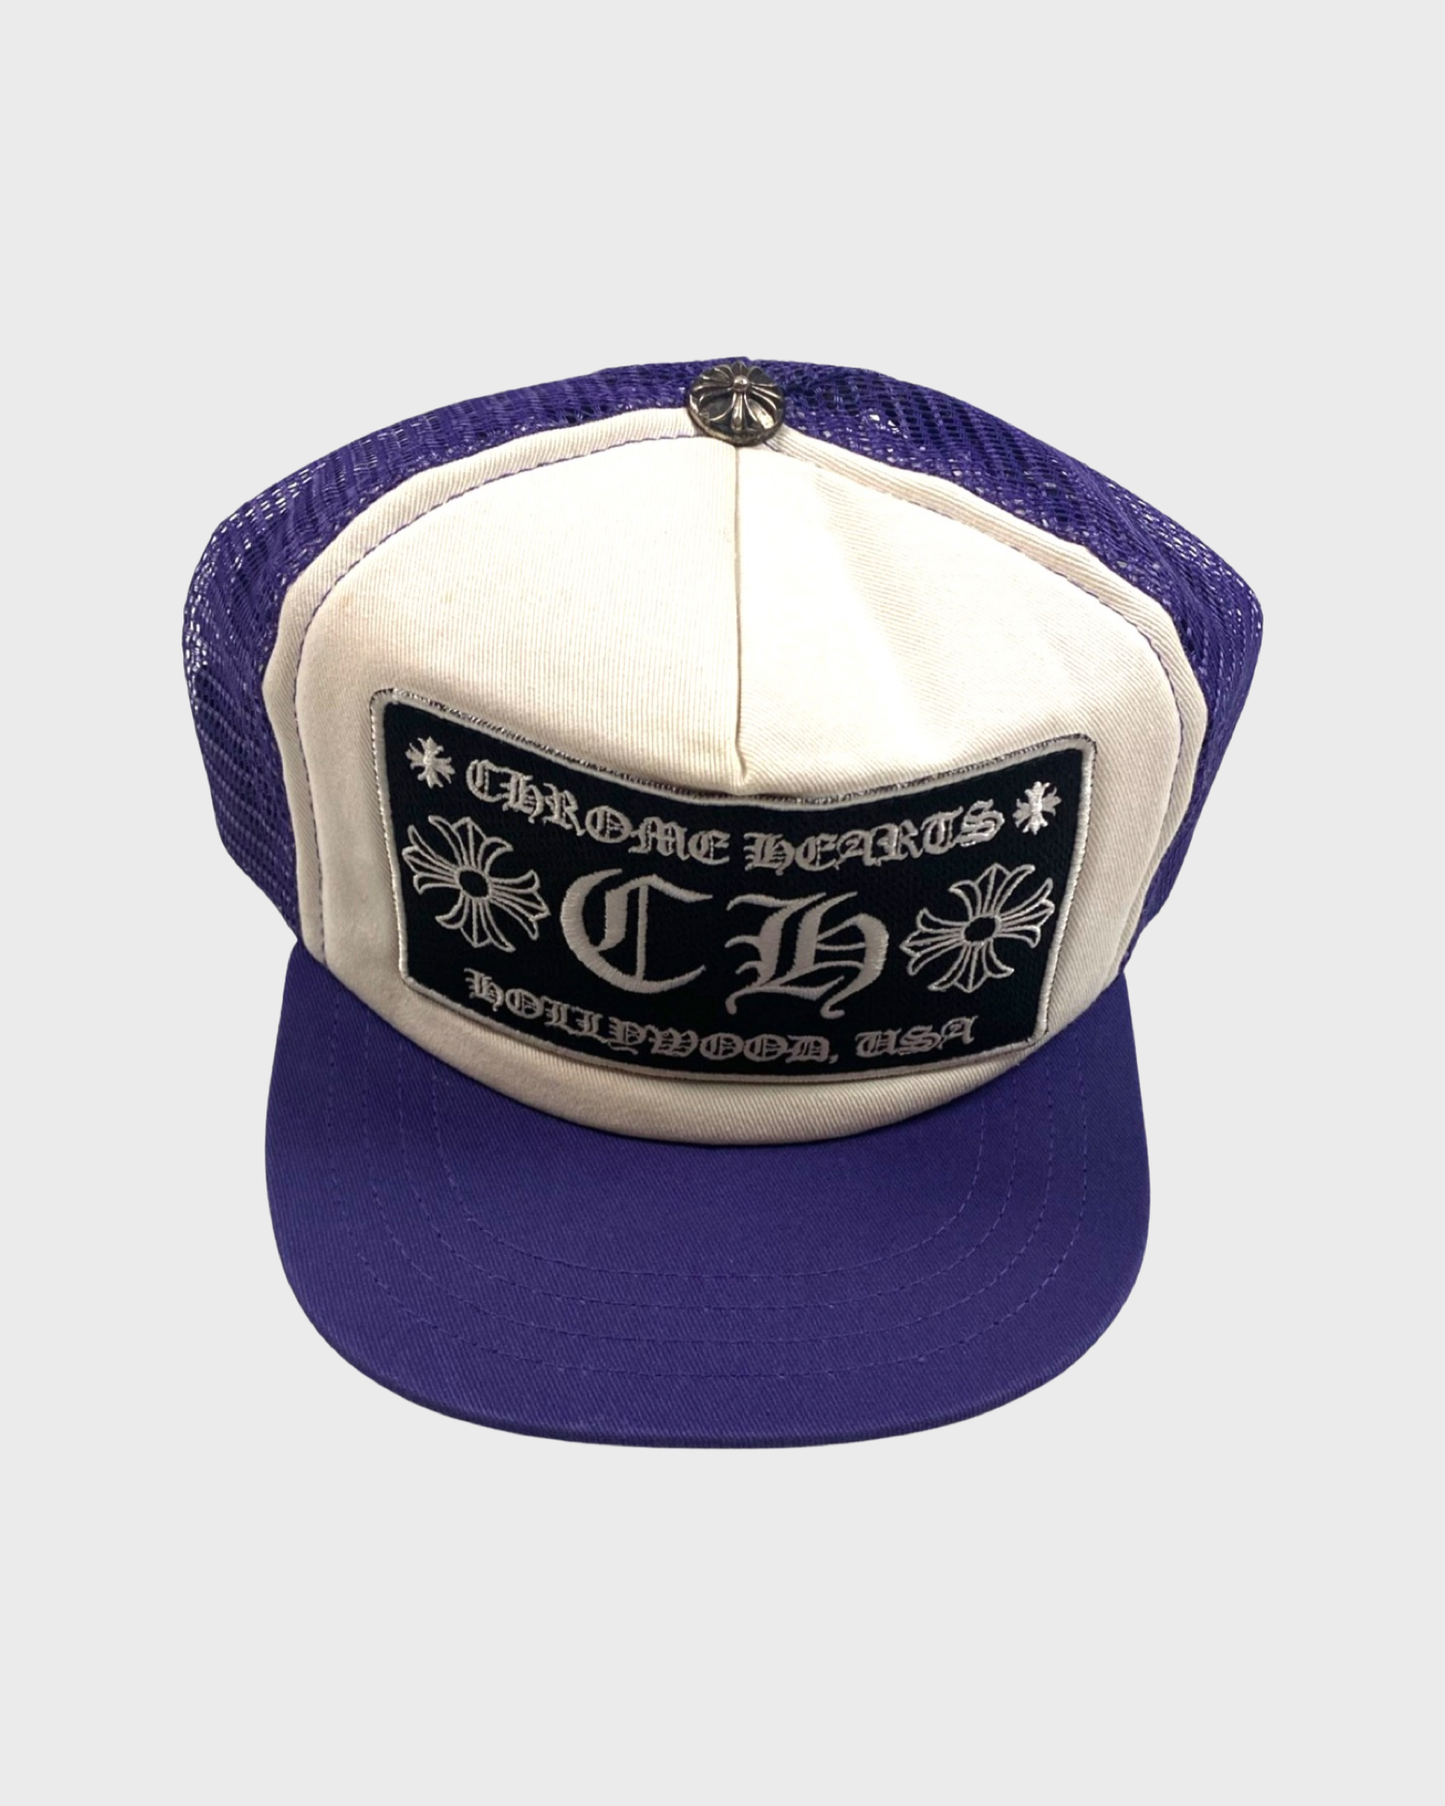 Chrome Hearts purple & white trucker hat / cap SZ:OS